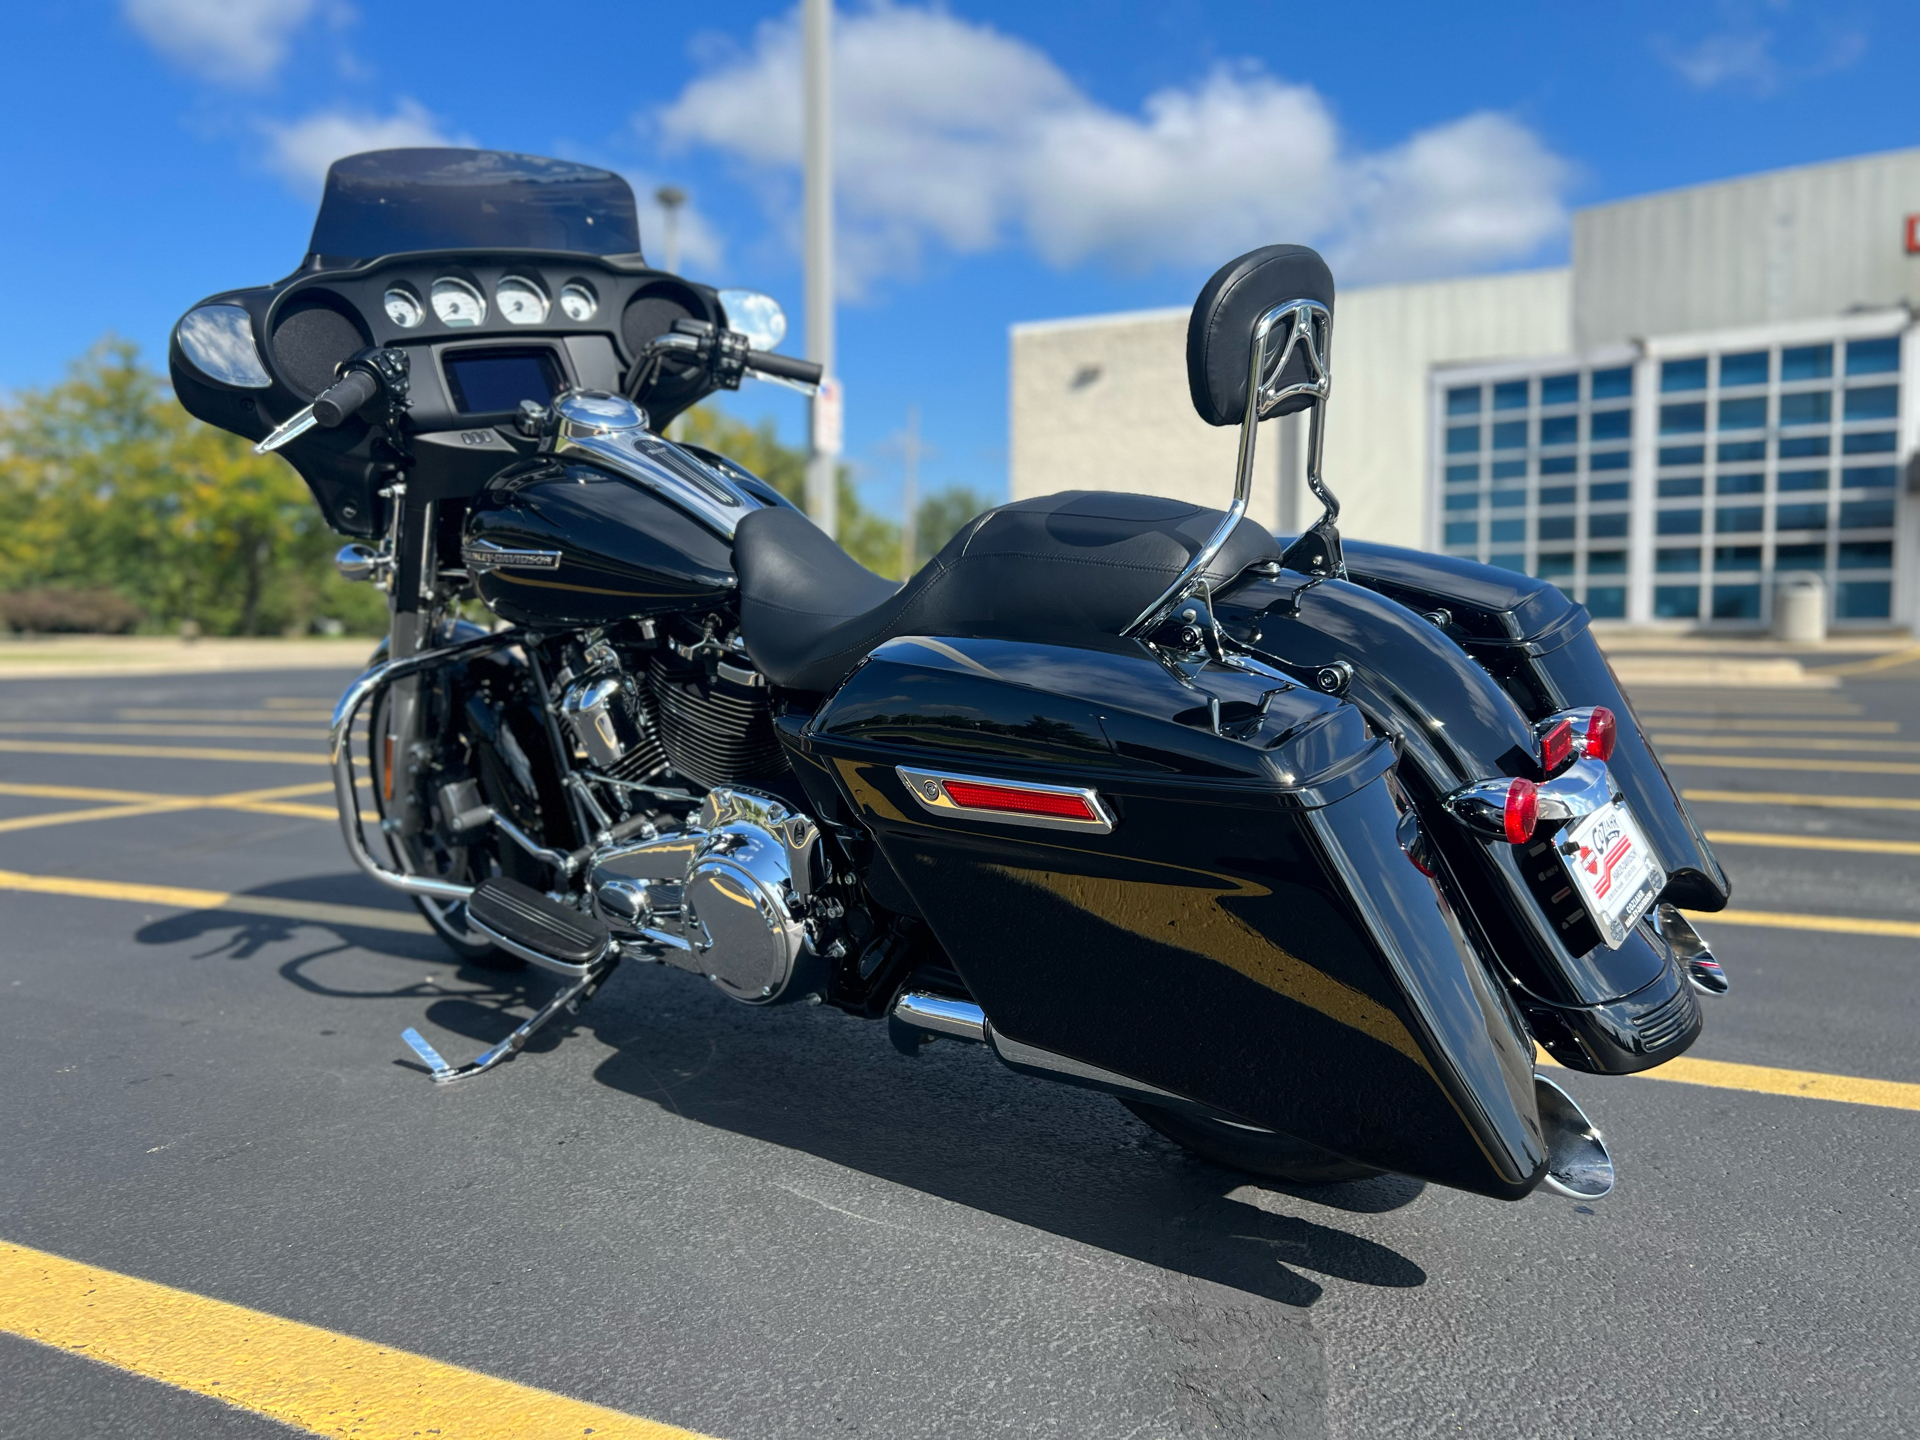 2021 Harley-Davidson Street Glide® in Forsyth, Illinois - Photo 6